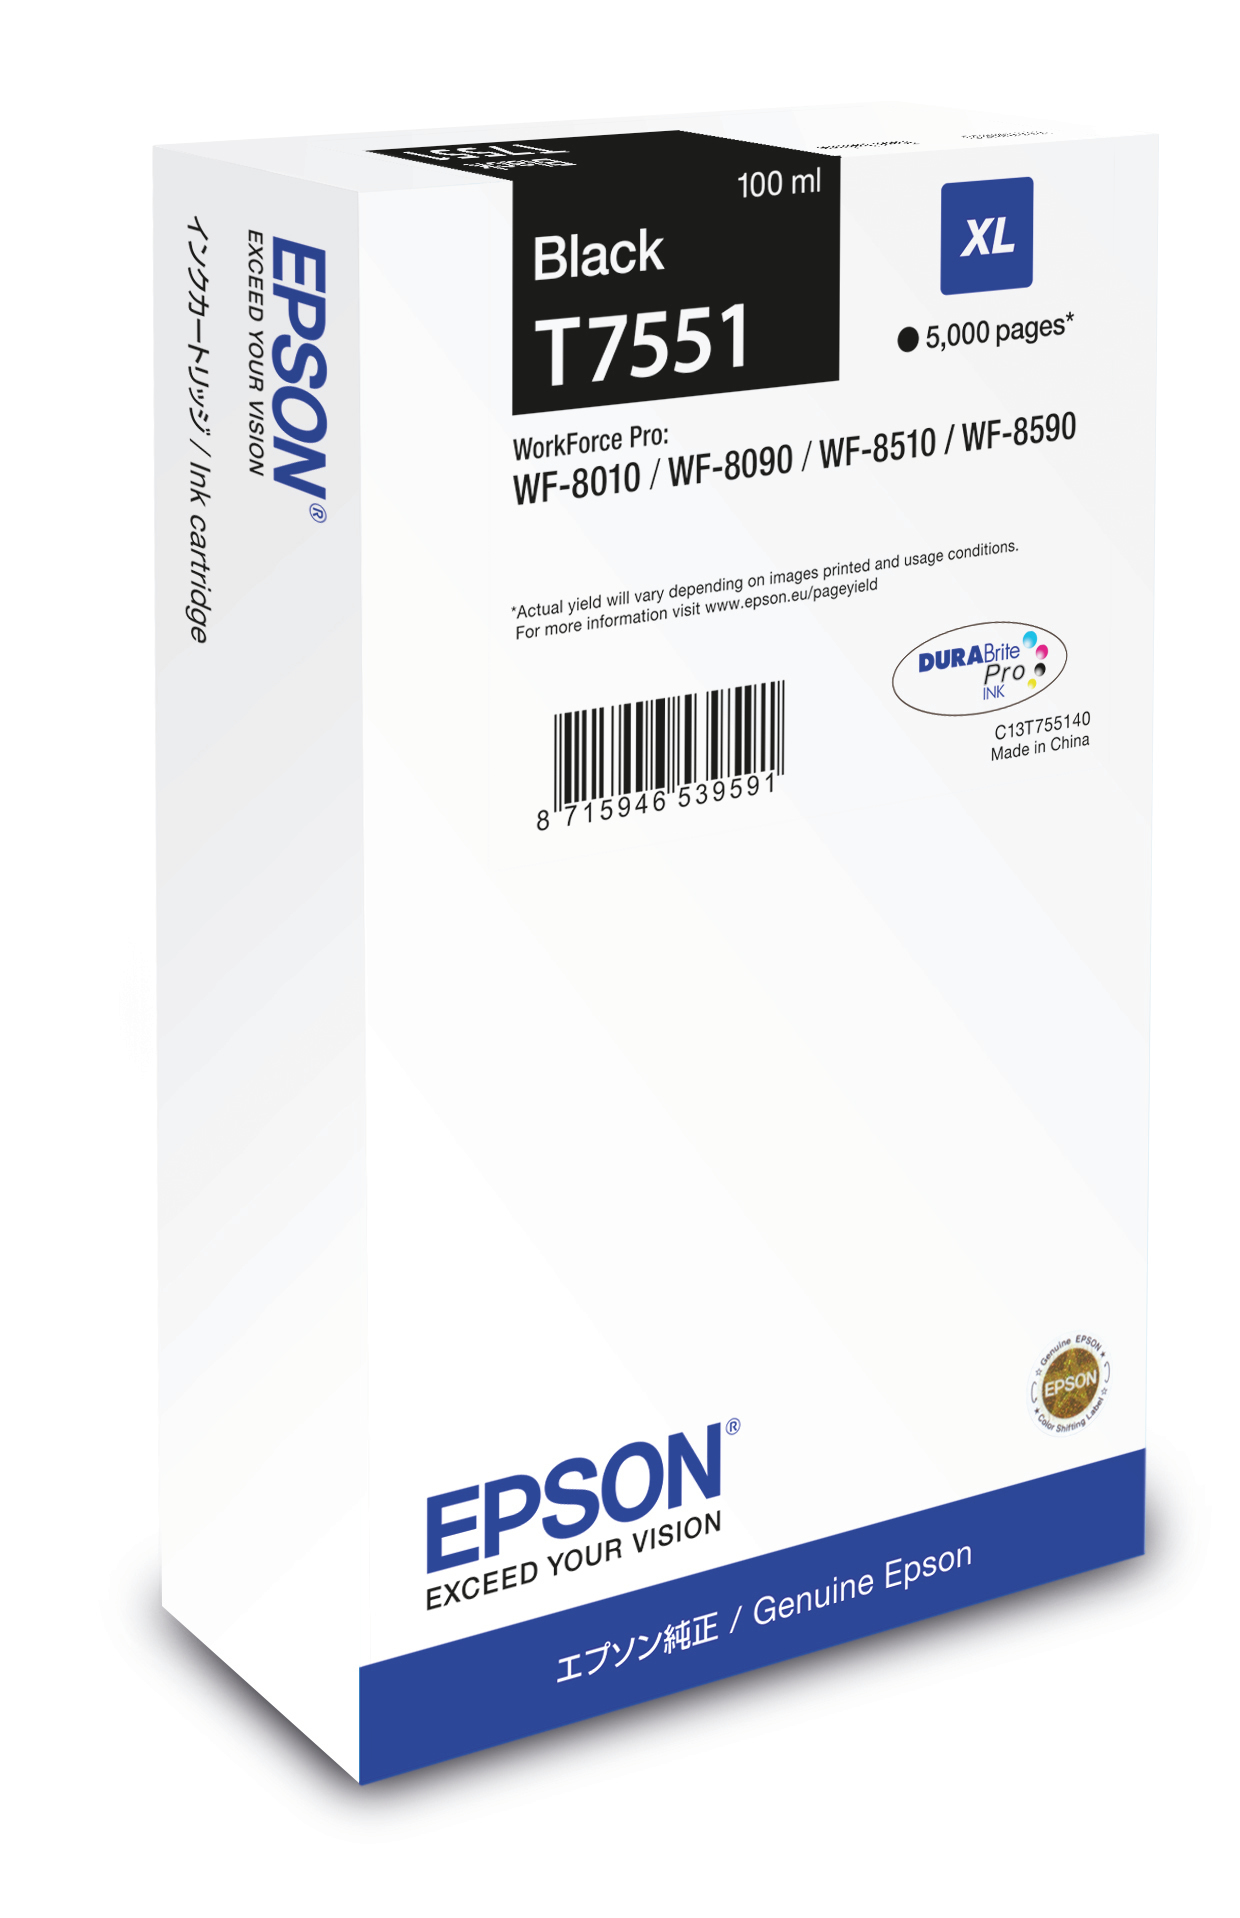 Epson - Supplies Ink Cons.(s1 S2 Wf-8xxx Seriesinkcartr.xlblack      Pigment Ink Durabritepro Sizexl     C13t755140